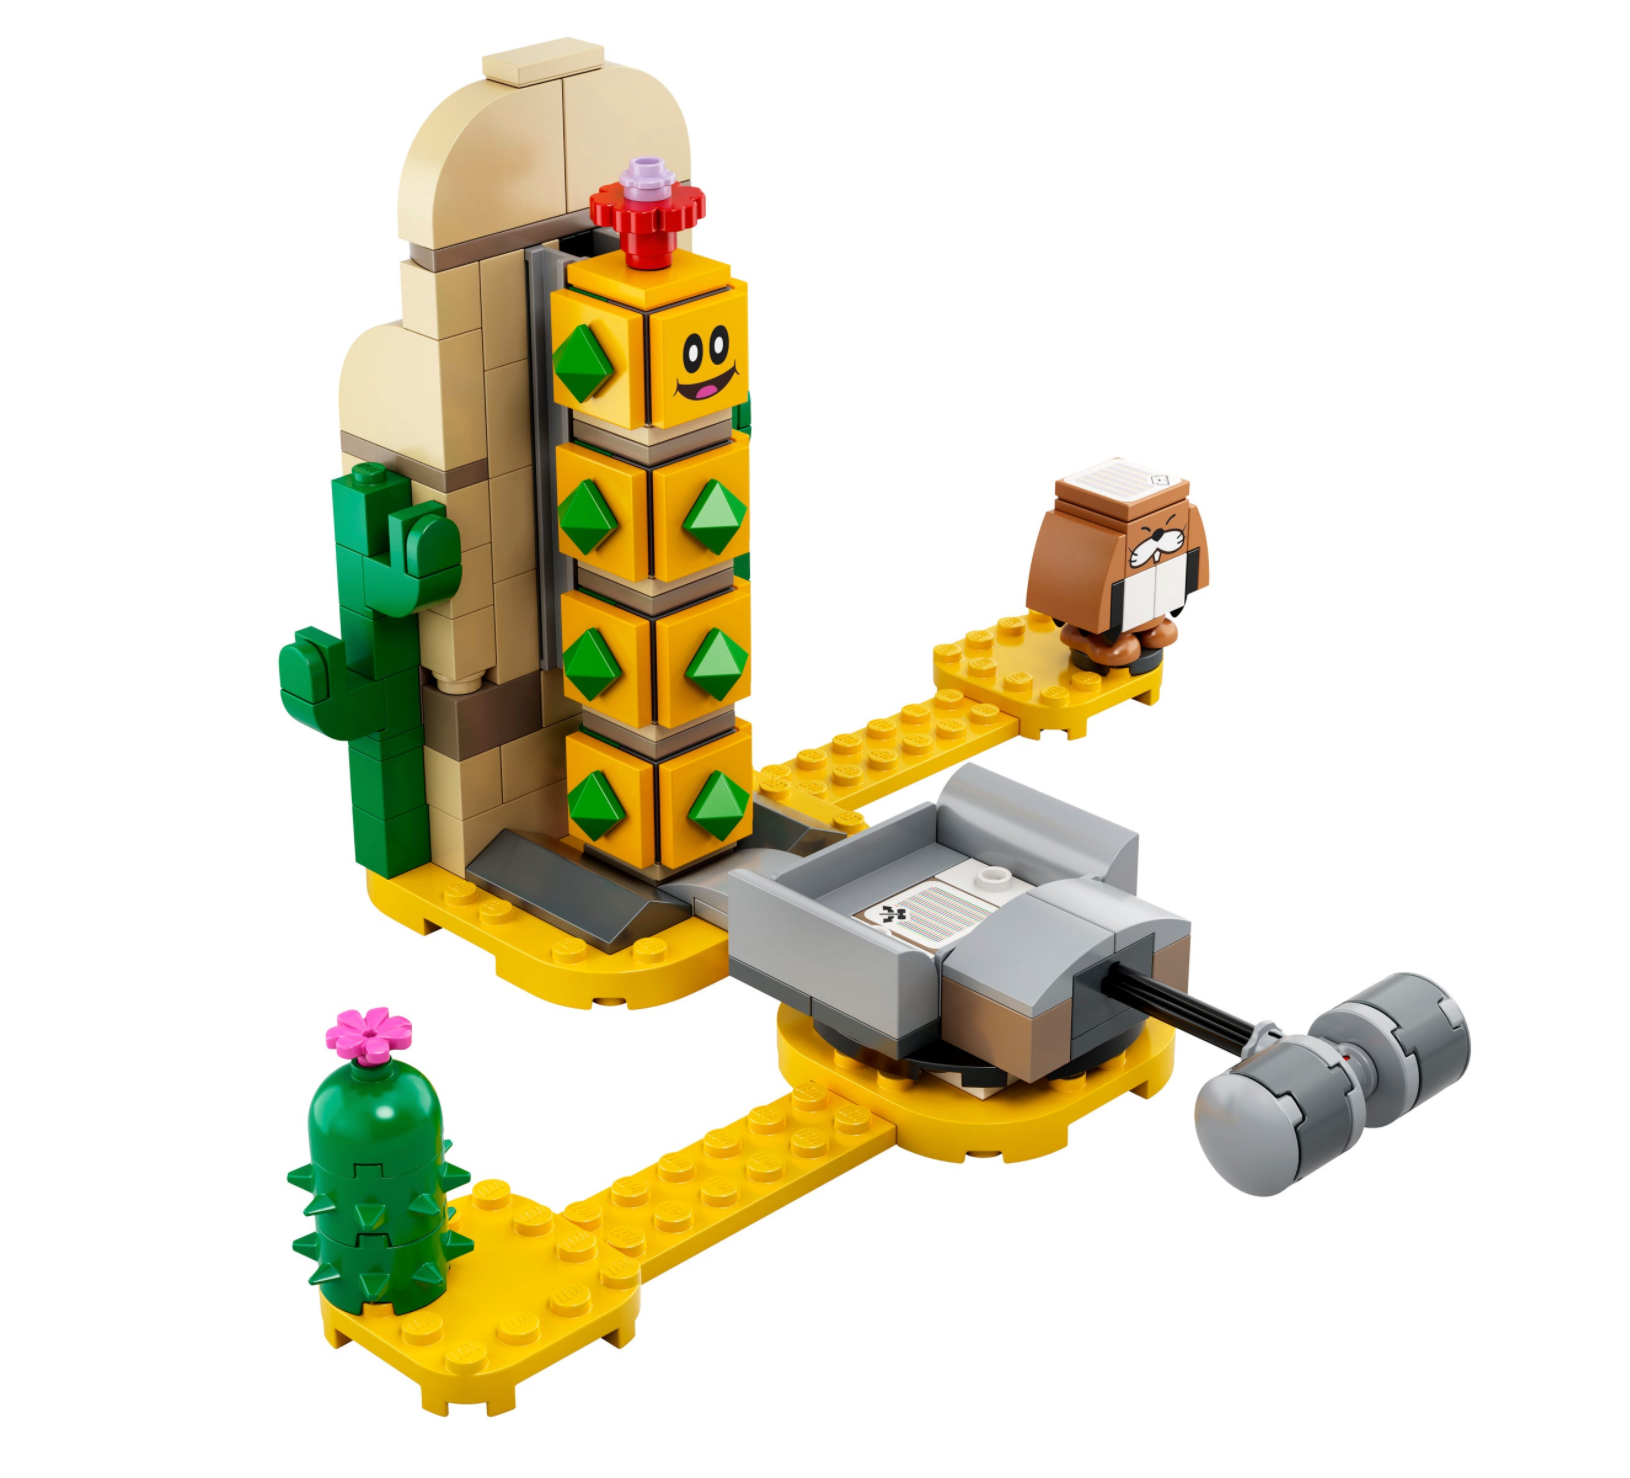 LEGO: Super Mario - Desert Pokey Expansion Set